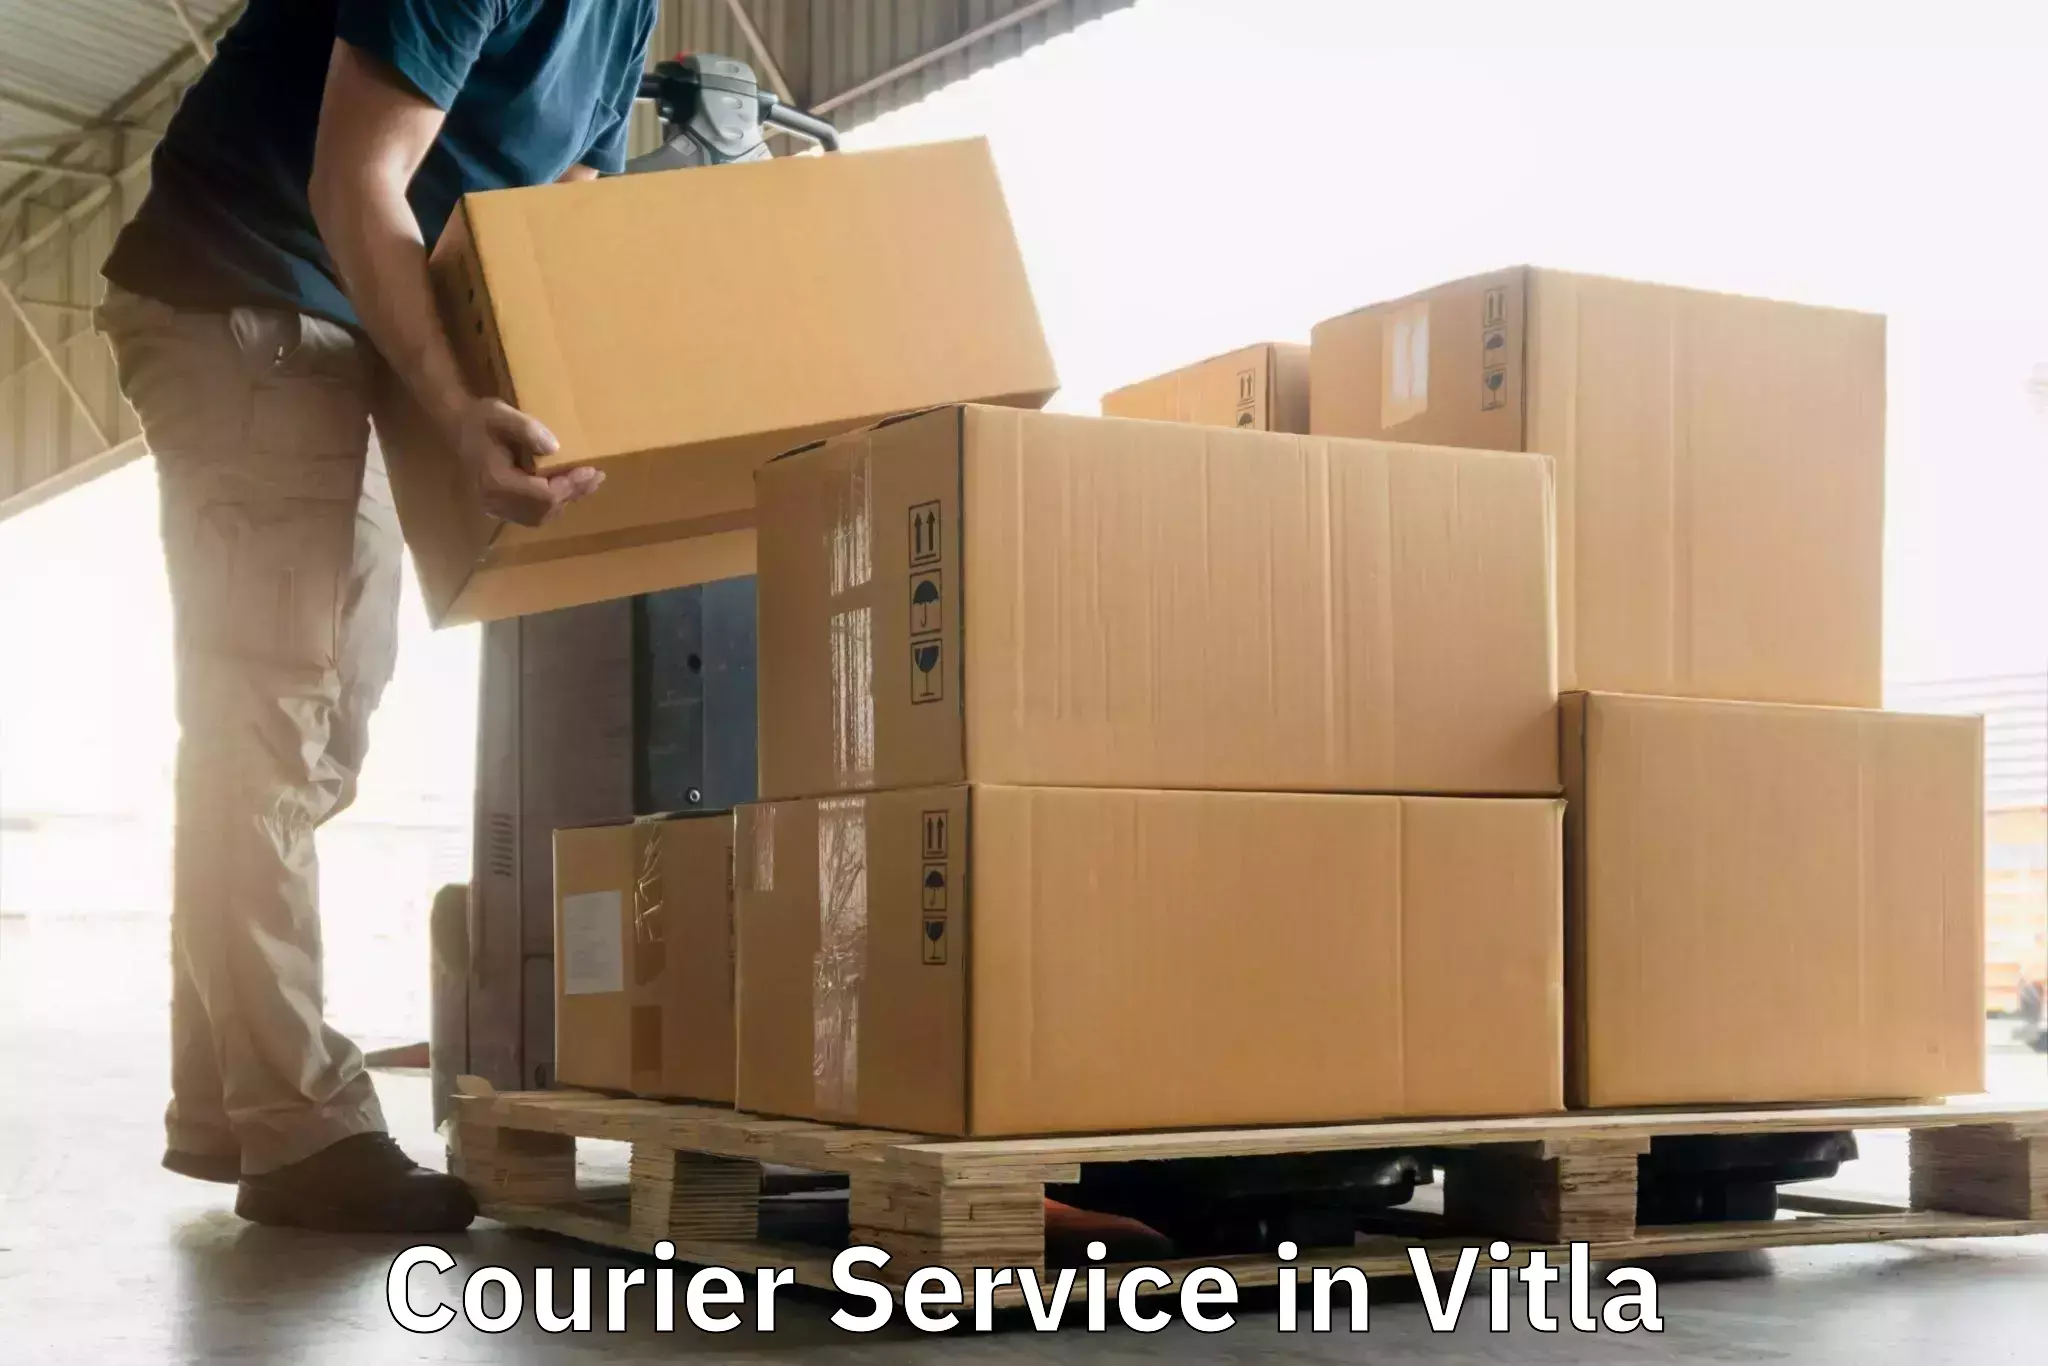 Express package handling in Vitla